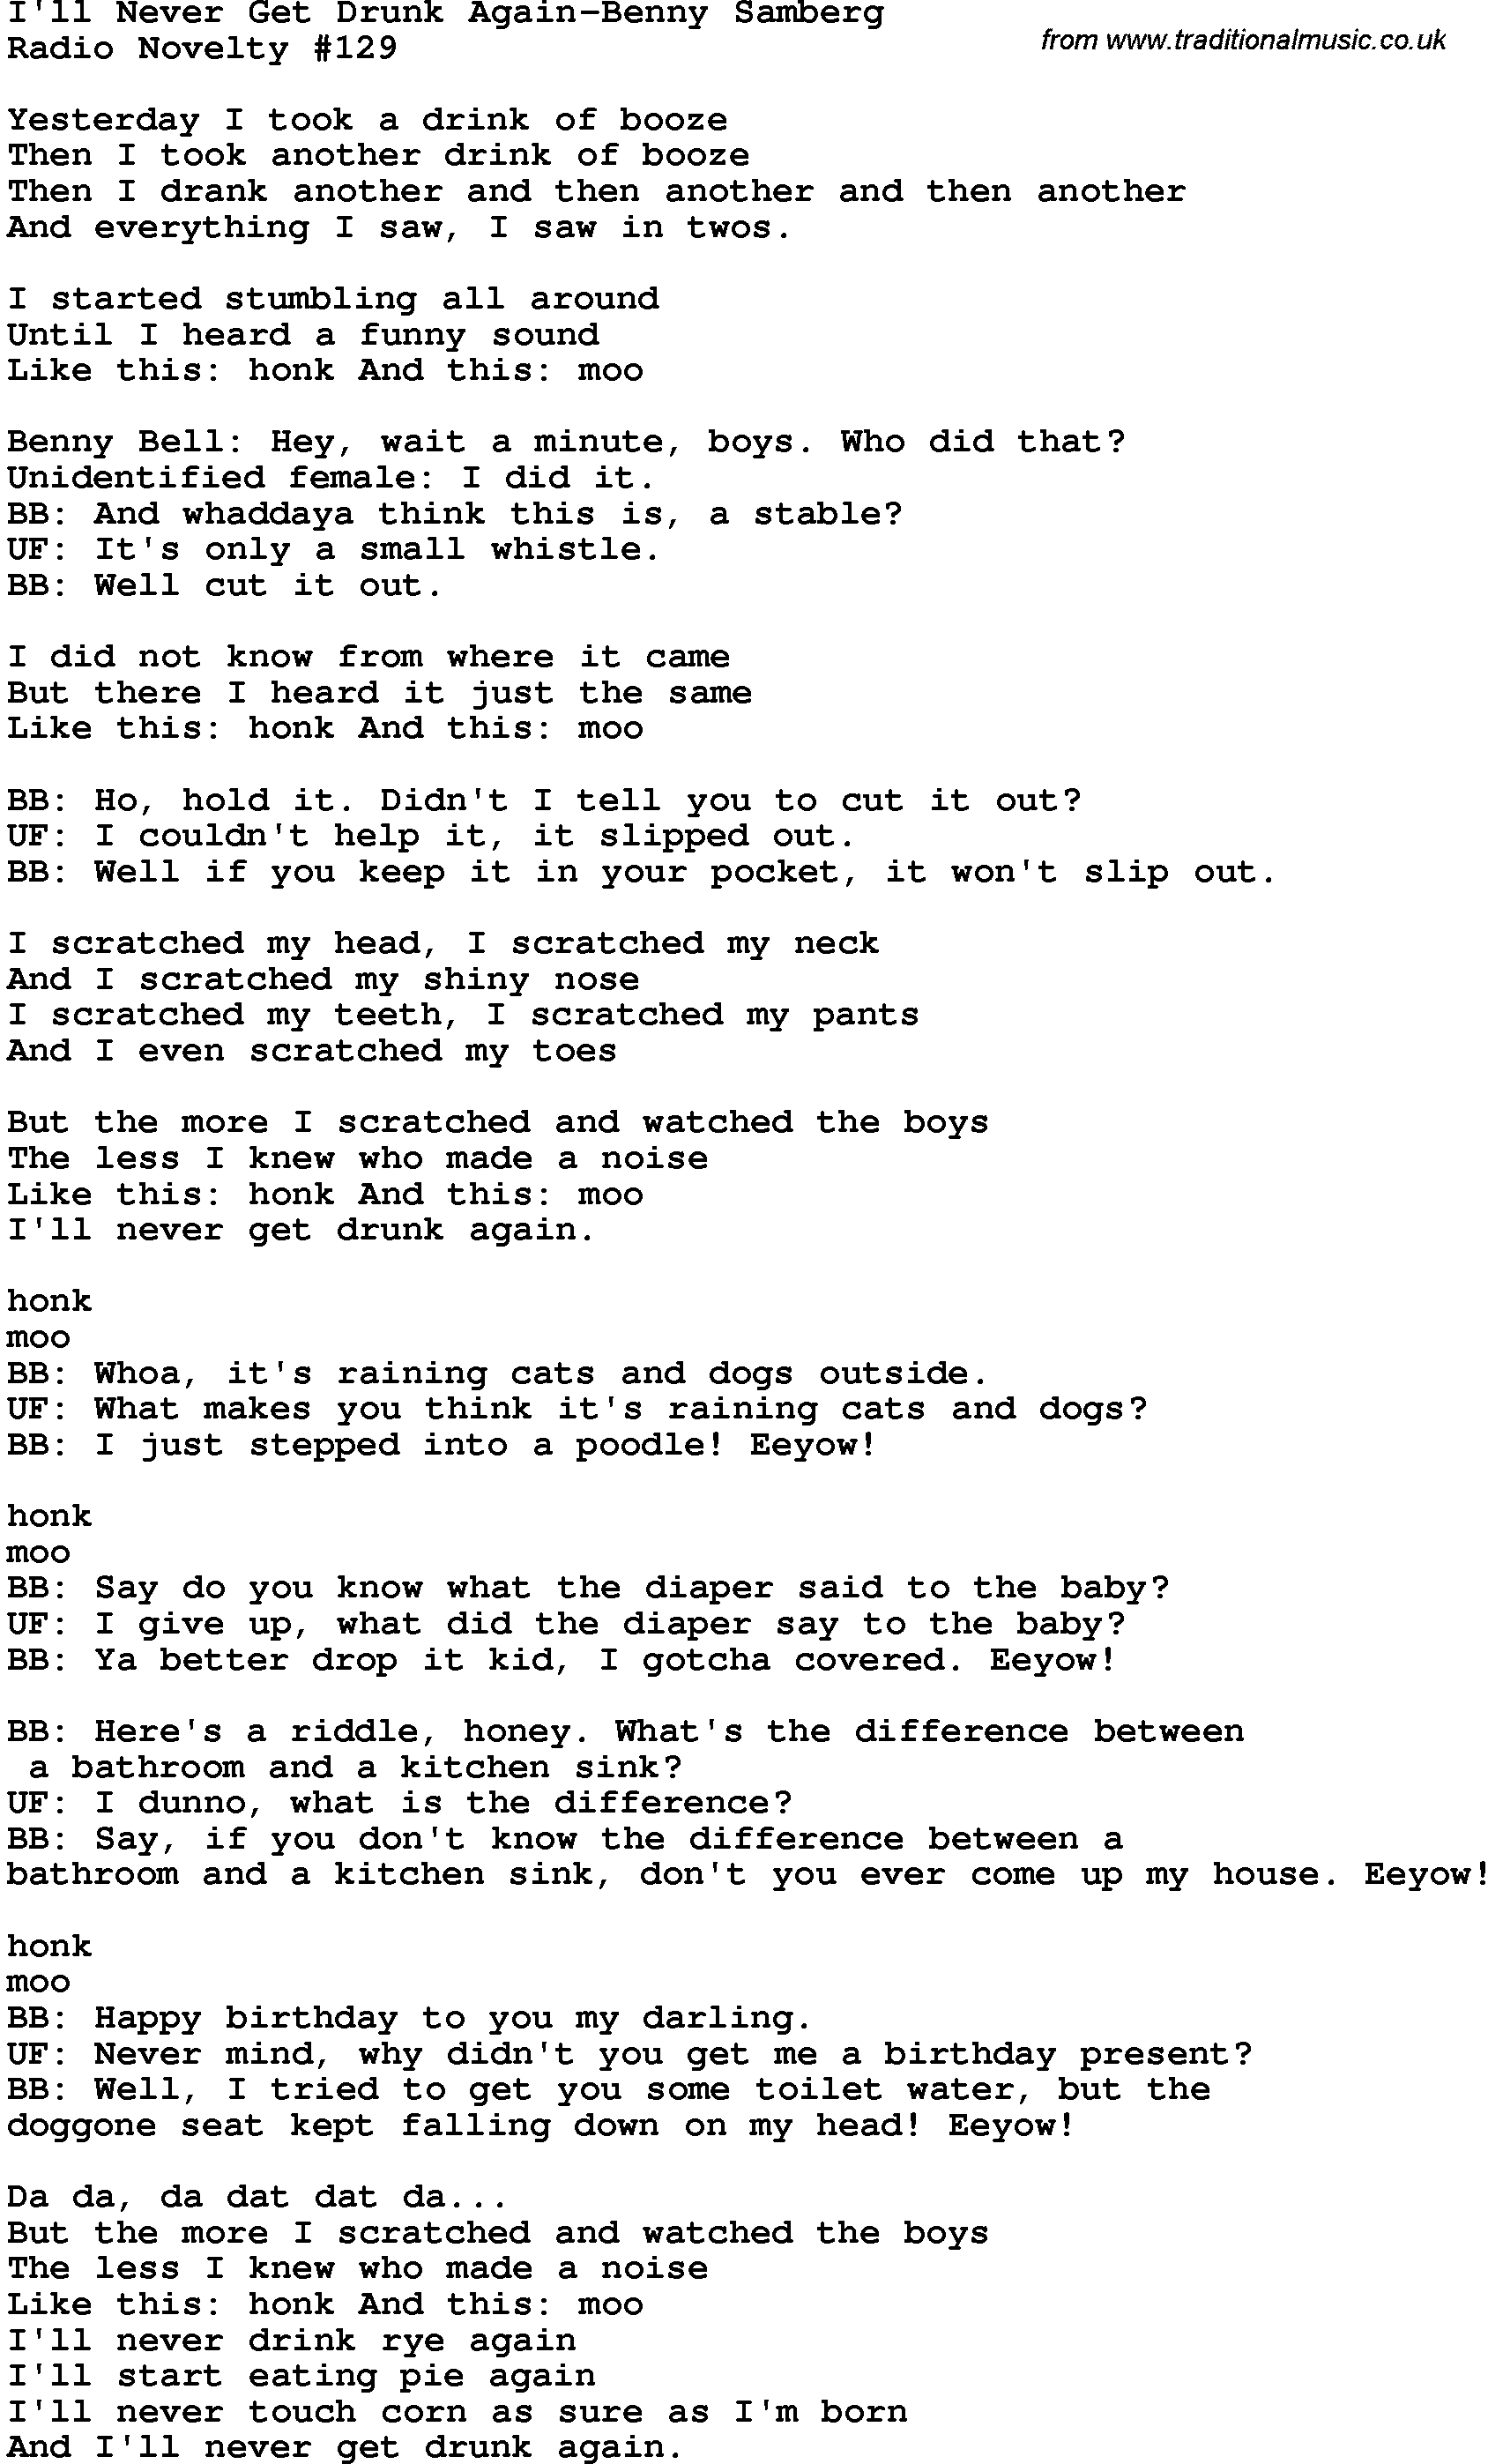 Novelty song: I'll Never Get Drunk Again-Benny Samberg lyrics